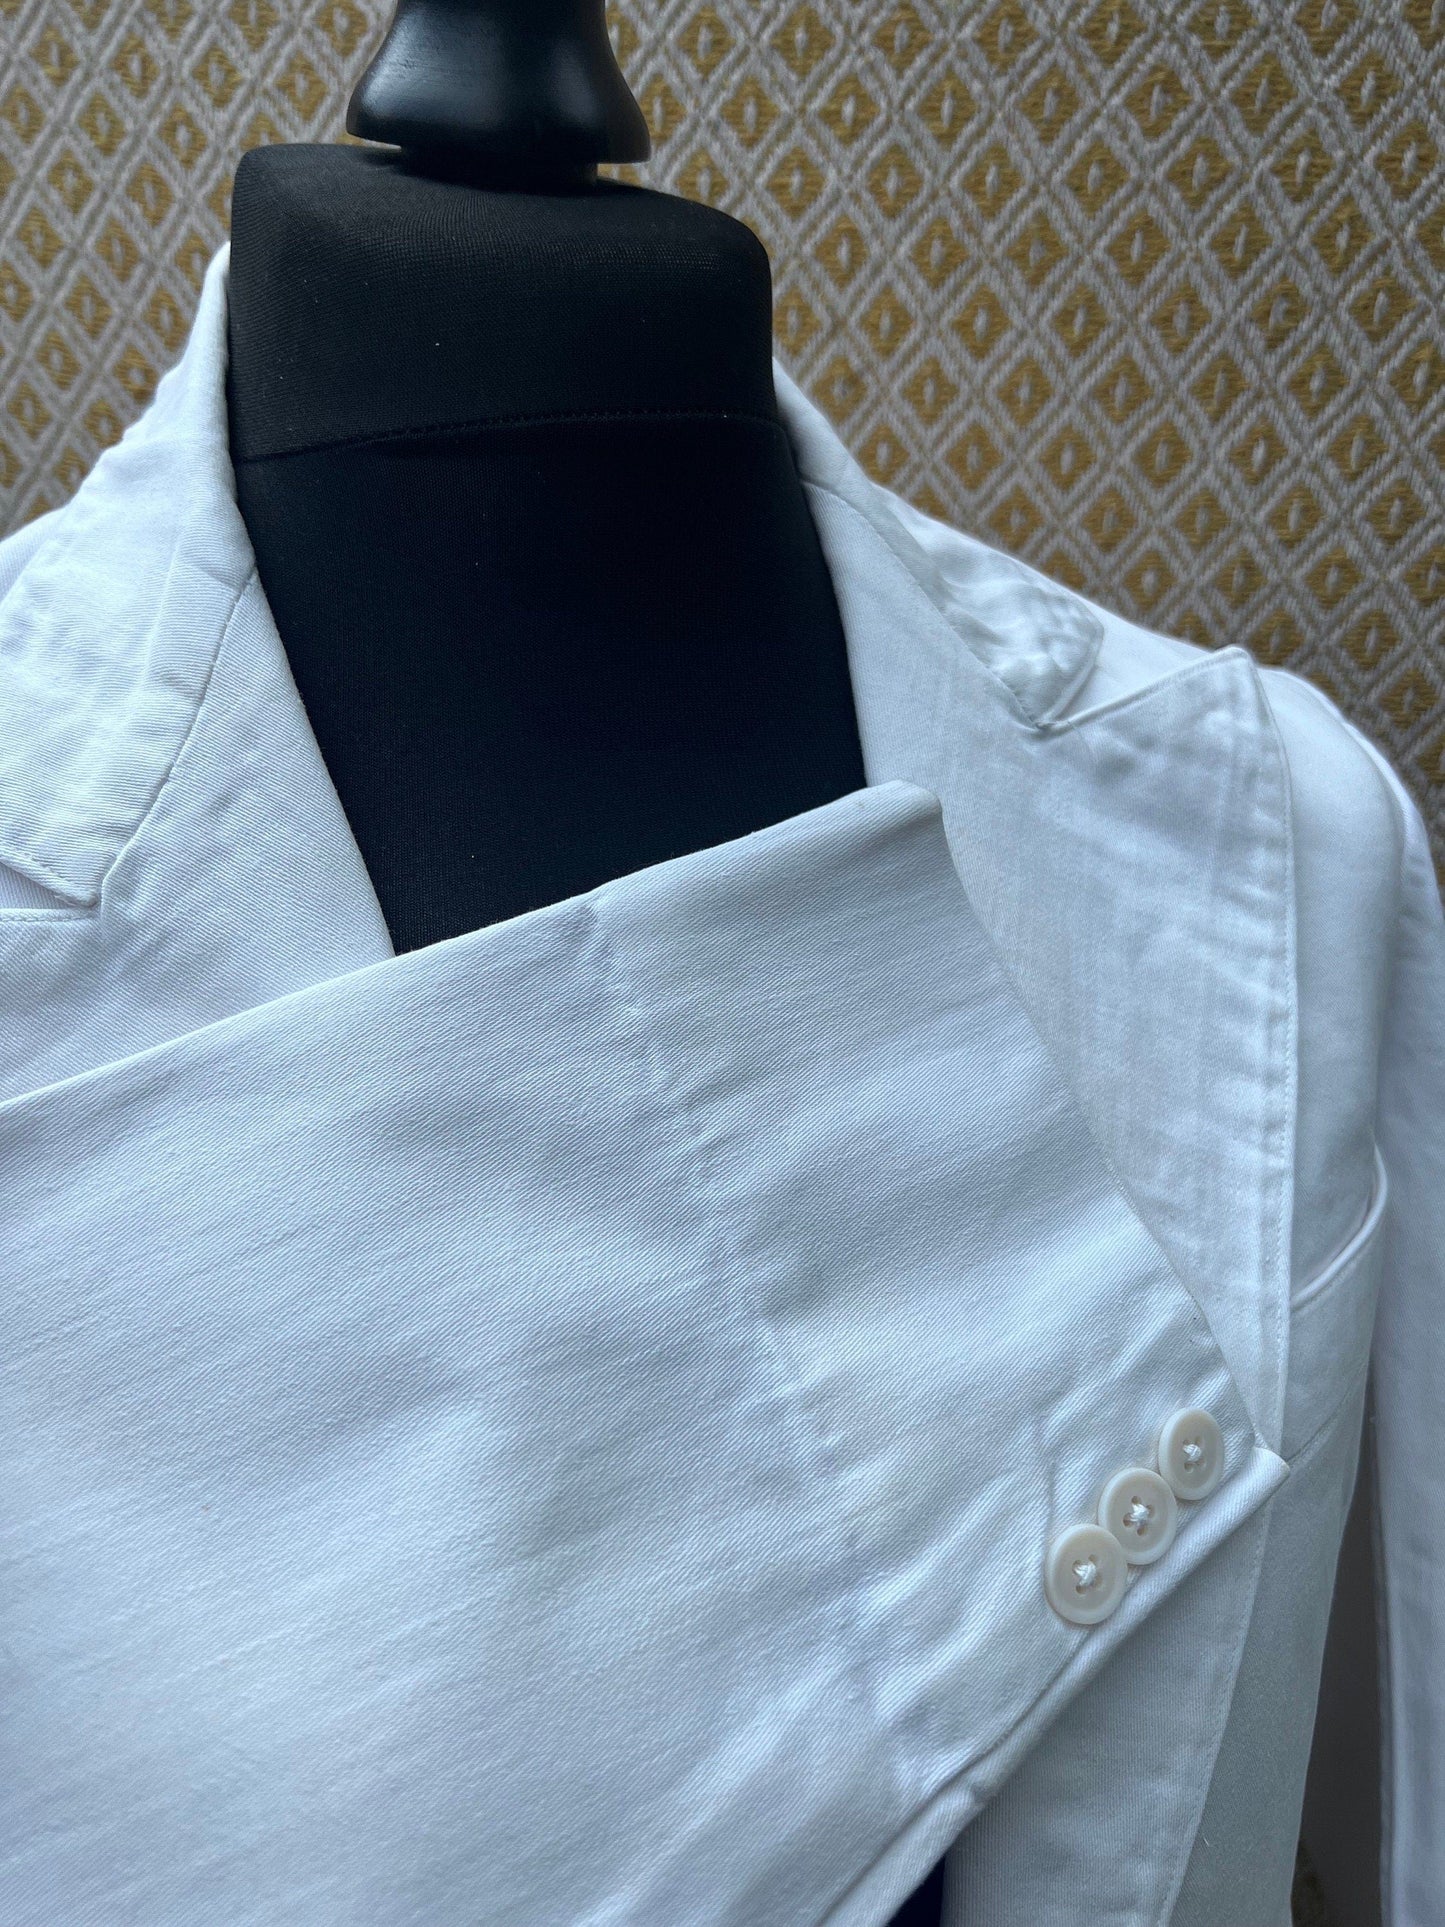 Men’s Vintage 1950s Jacket White Linen Jacket 1950s Single Button Vintage Dress Jacket, Vintage Blazer, Vintage Menswear, Vintage Jacket, 50